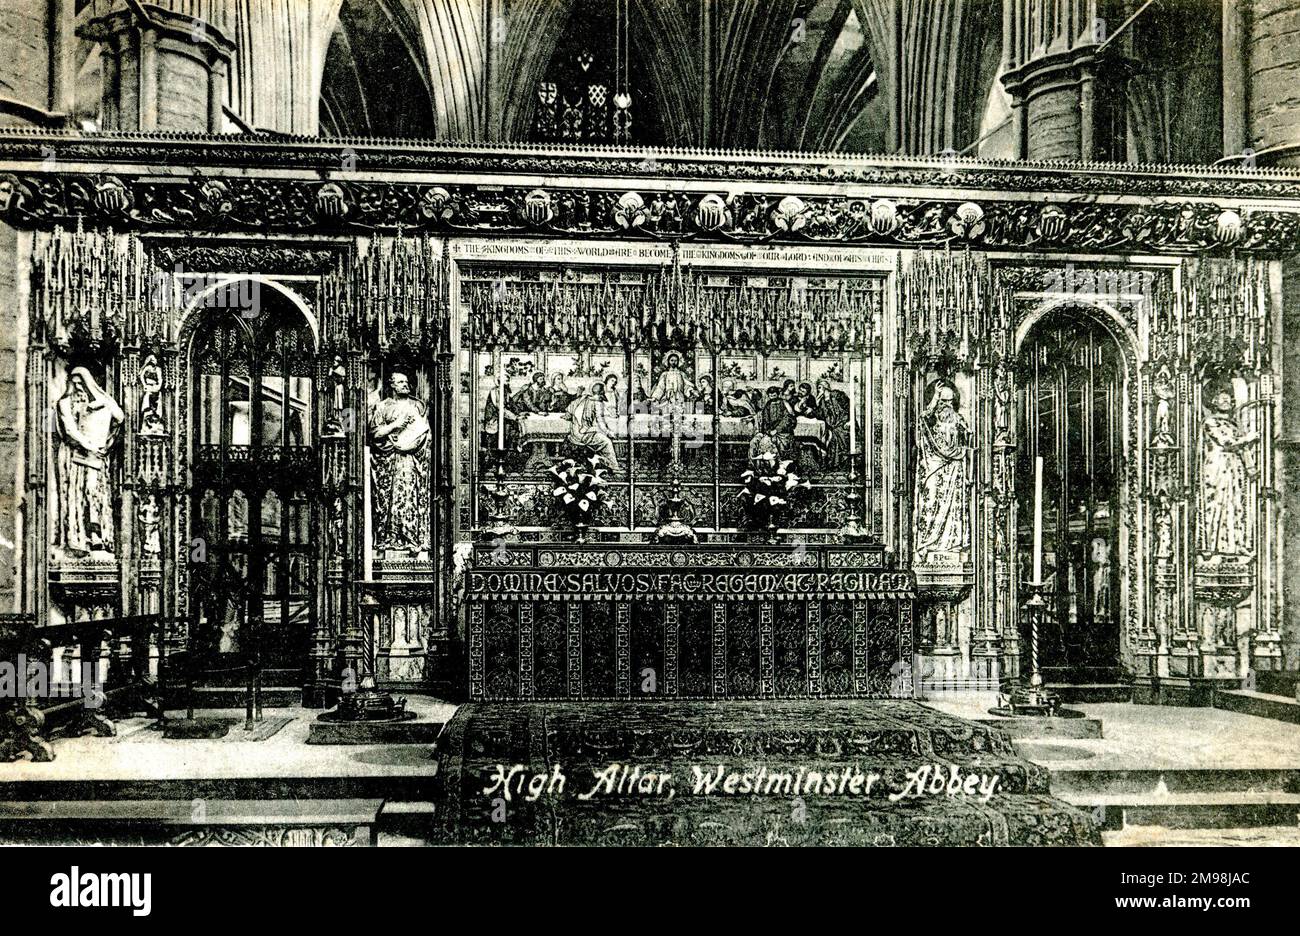 High Altar, Westminster Abbey, London. Stock Photo